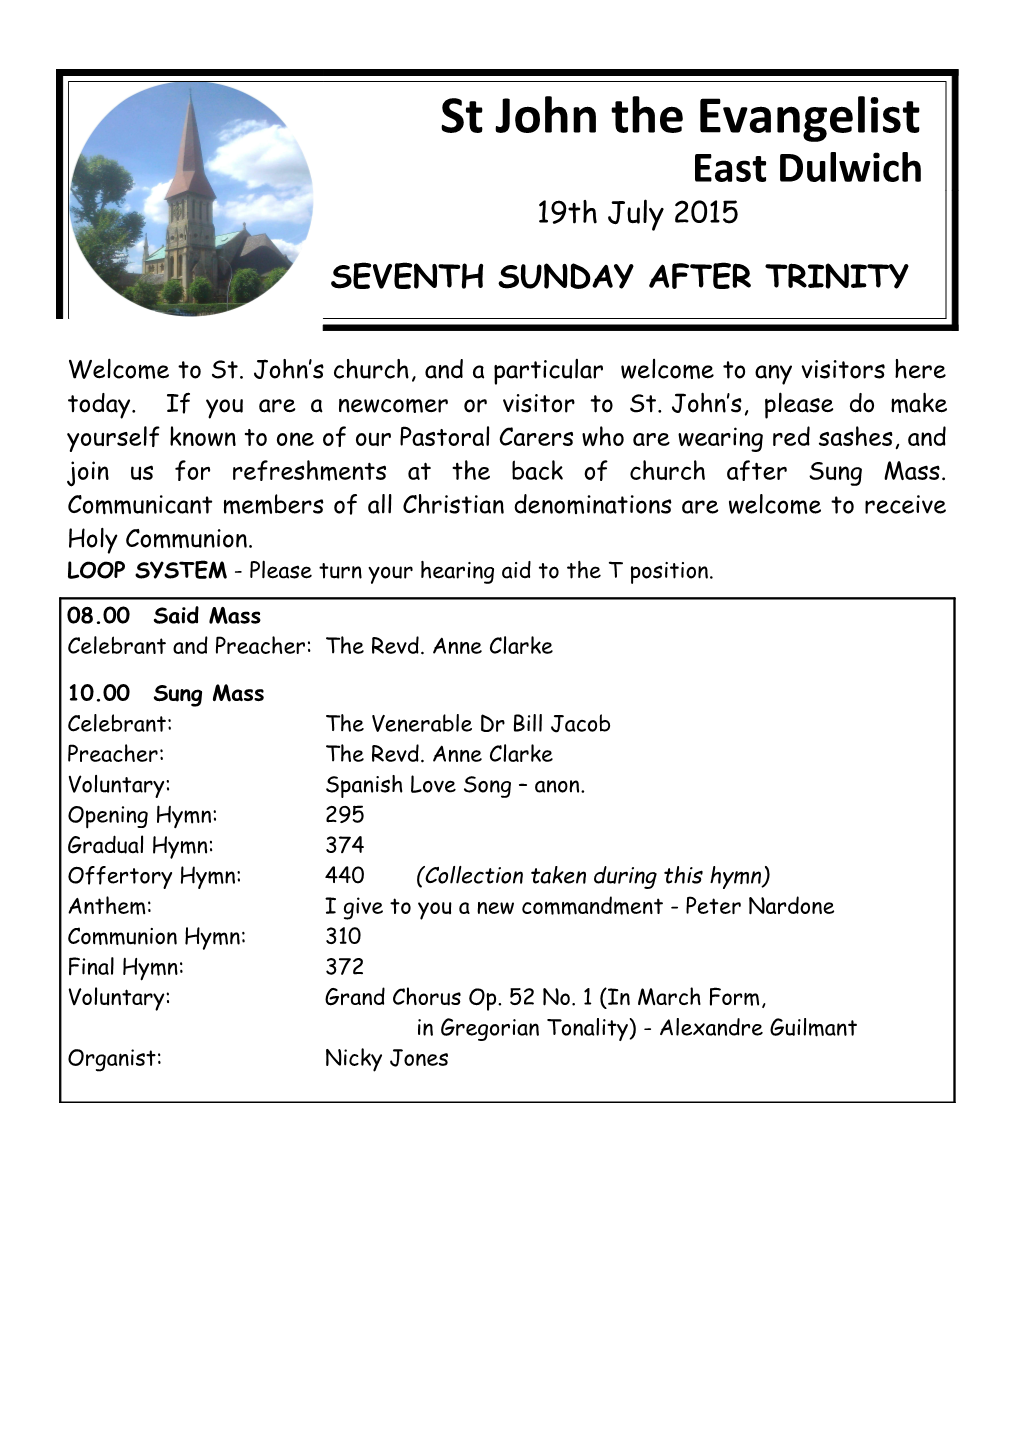 Seventh Sunday After Trinity